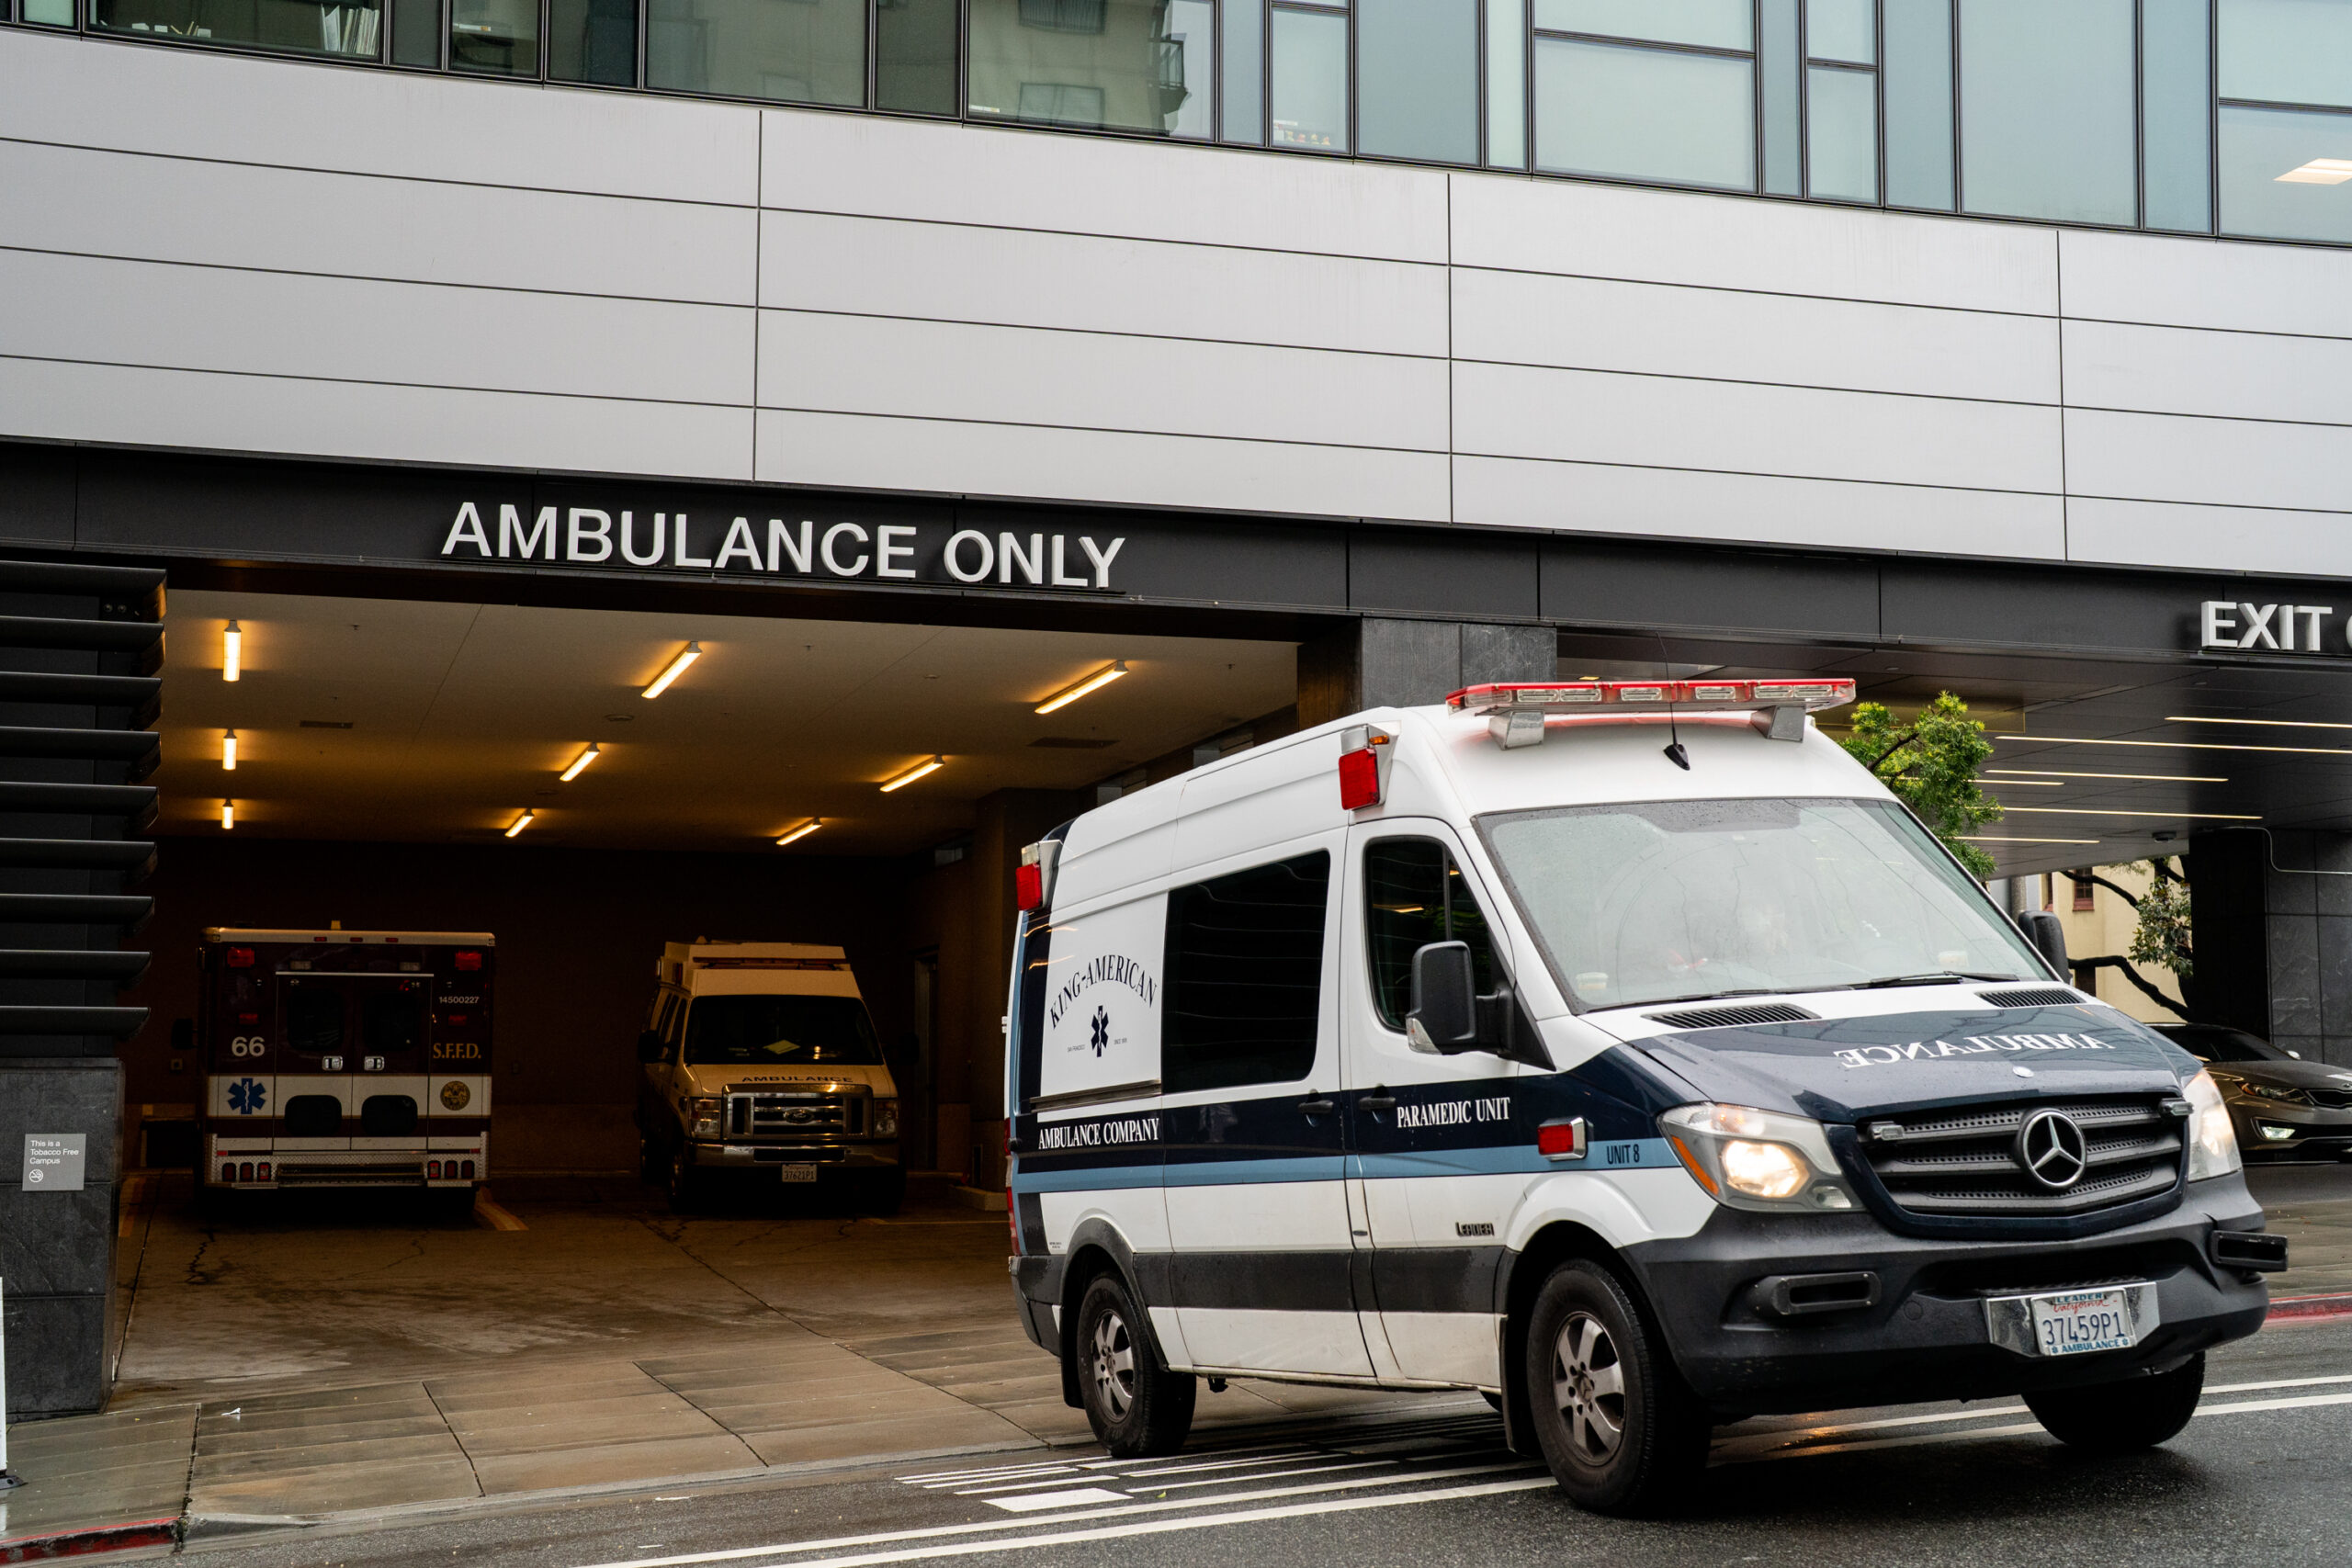 An ambulance backs into an ambulance bay at a hospital